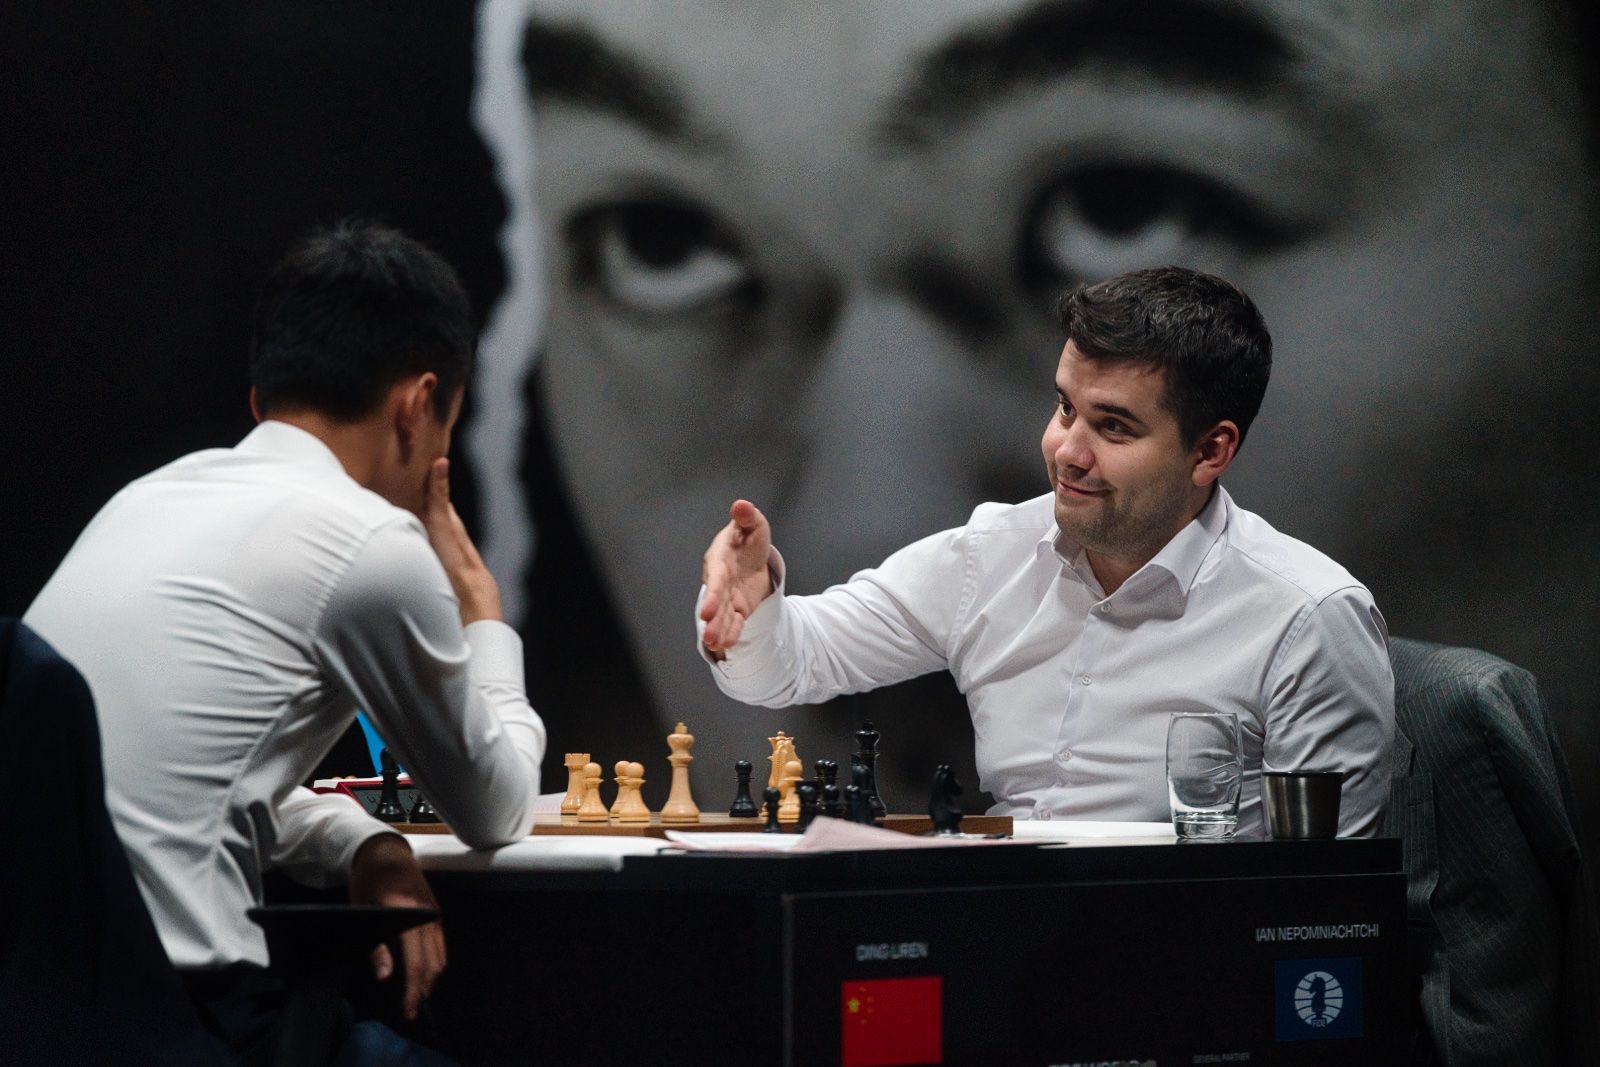 Chess game: Karpov x Csom, Rafael Leitão